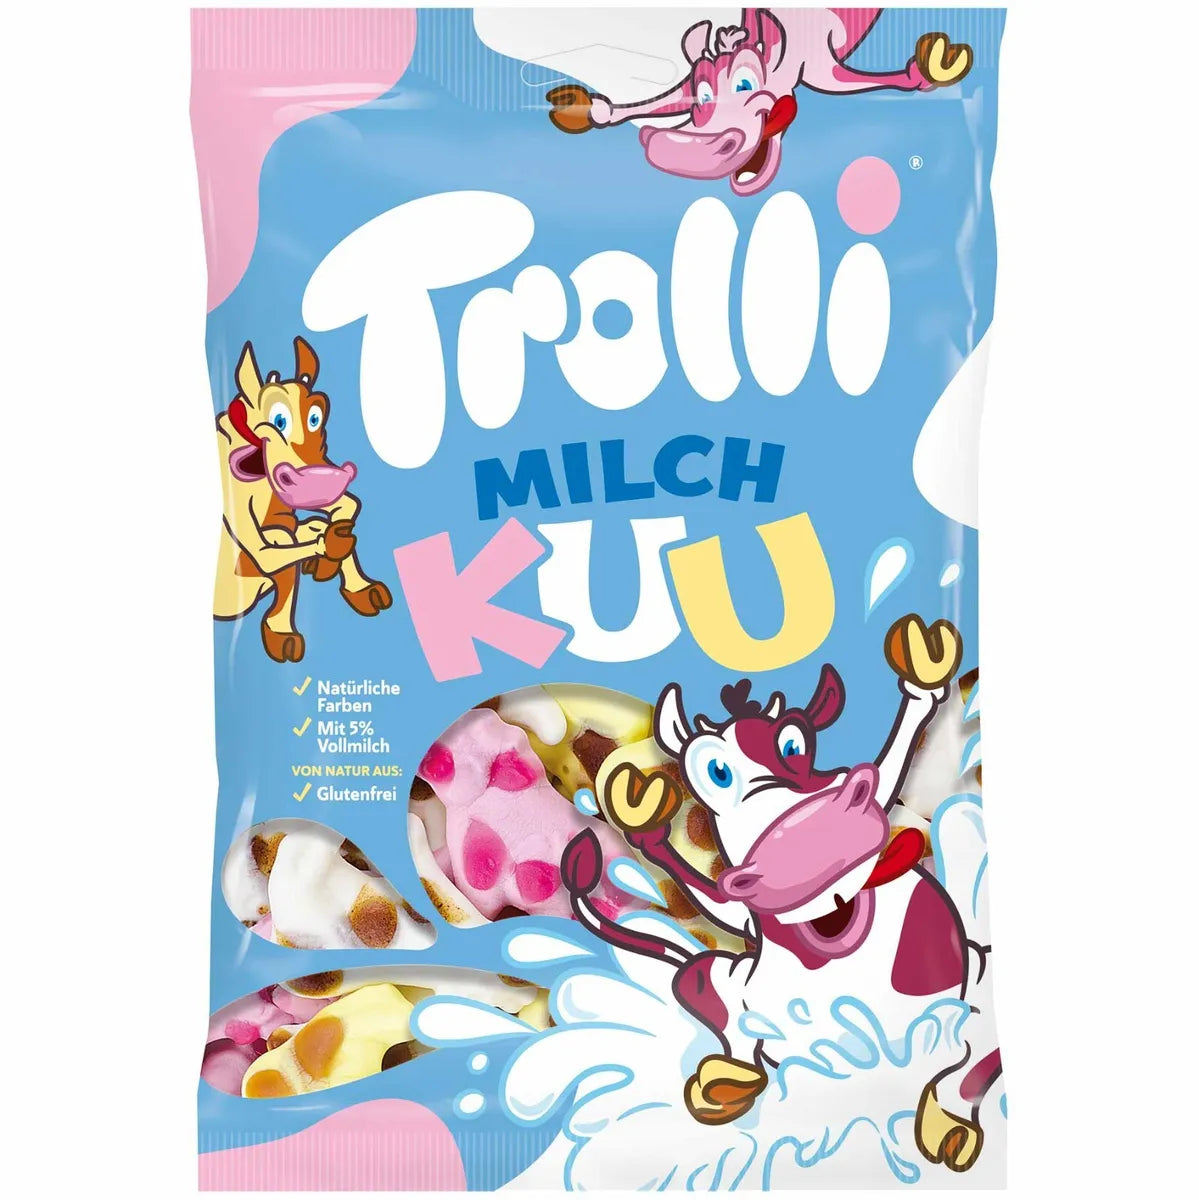 Trolli Milch Kuu 150g (18 Pack) A15